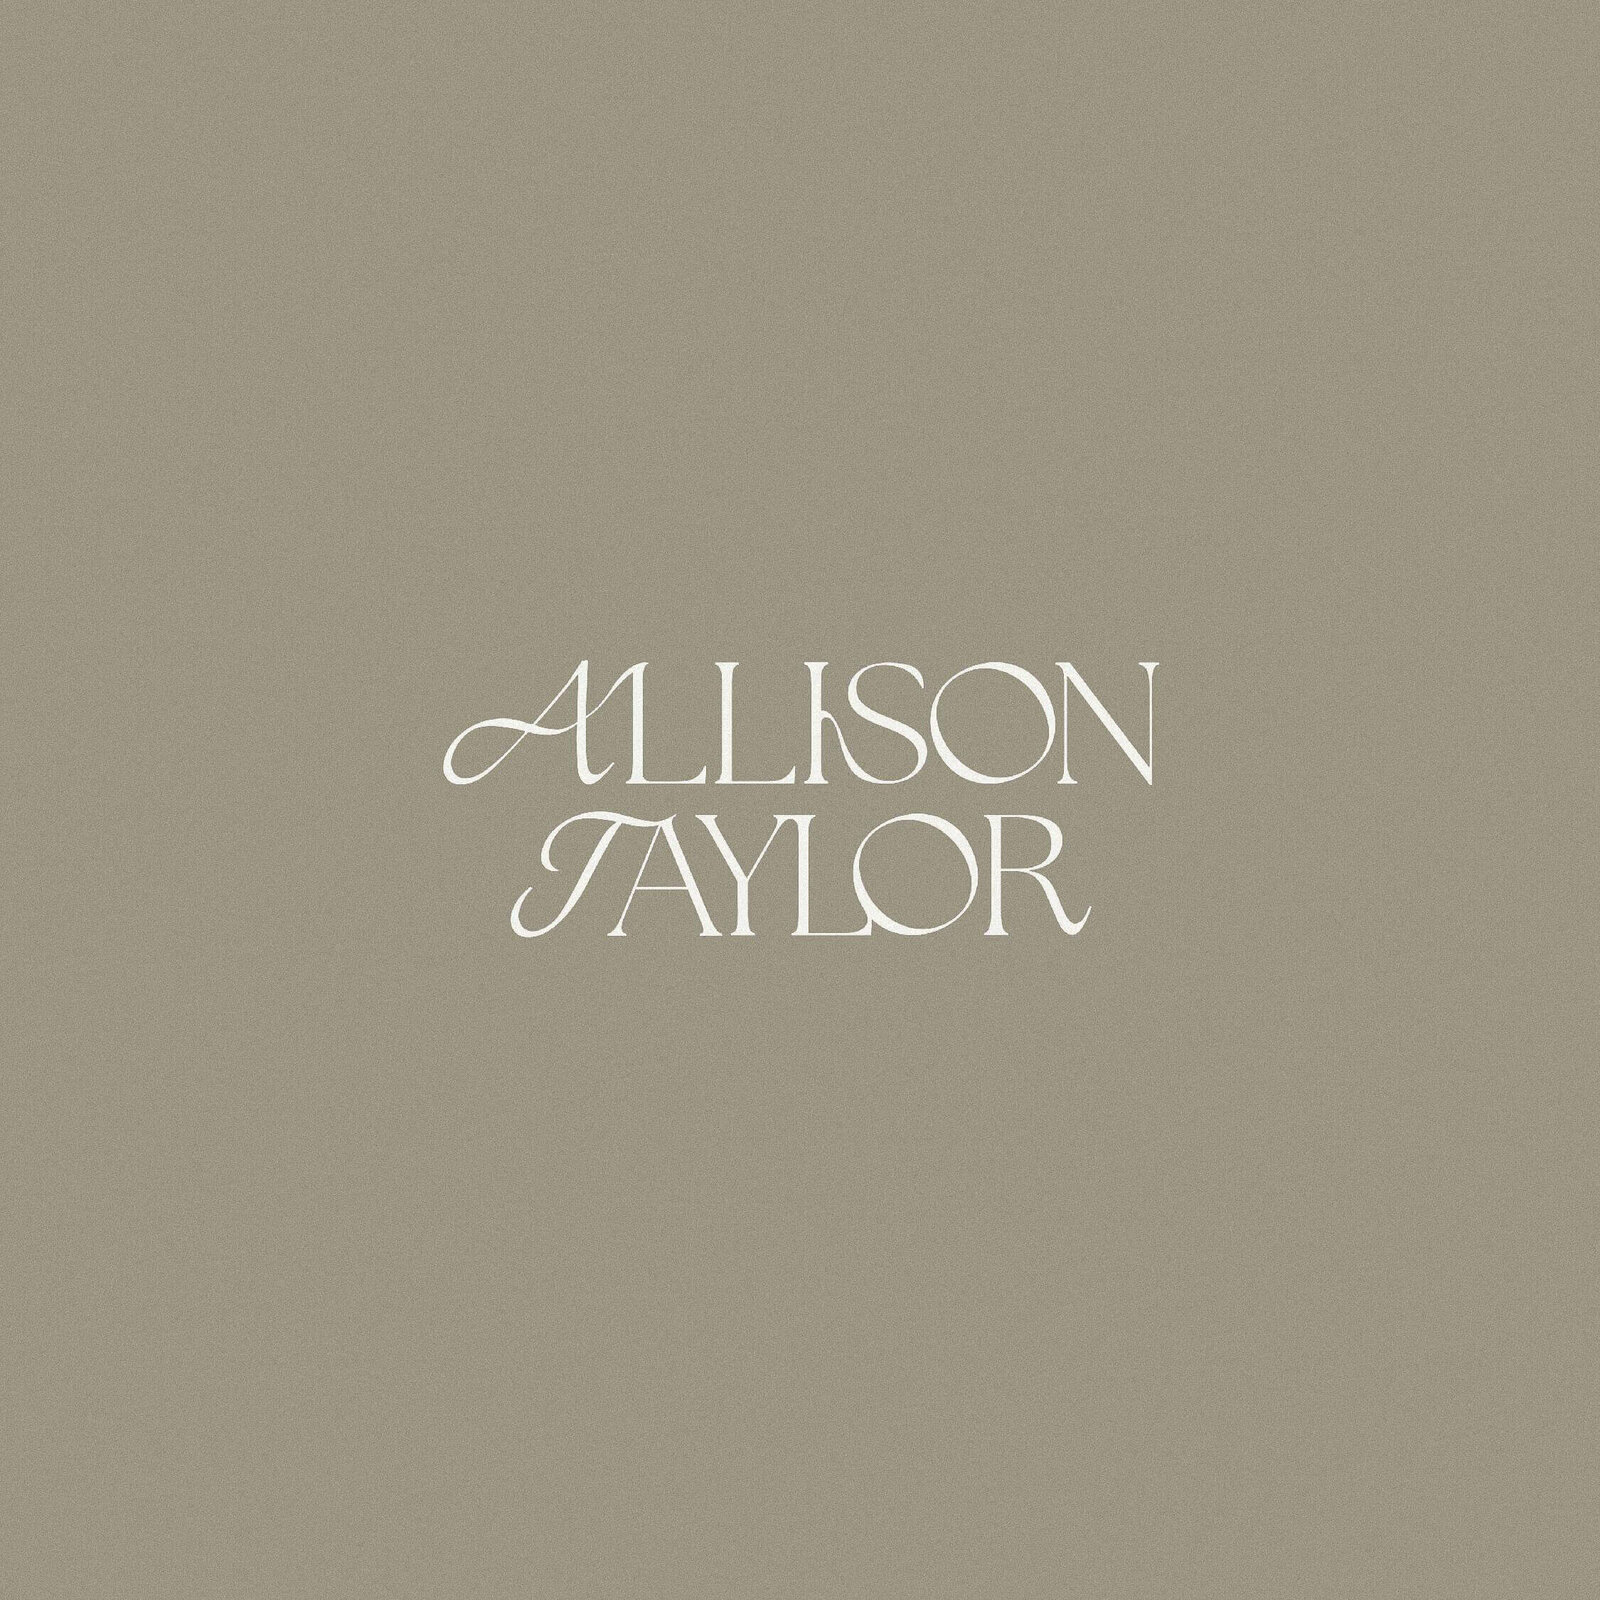 Allison taylor brand – 4-page-001 (1)-2 (1) (1)